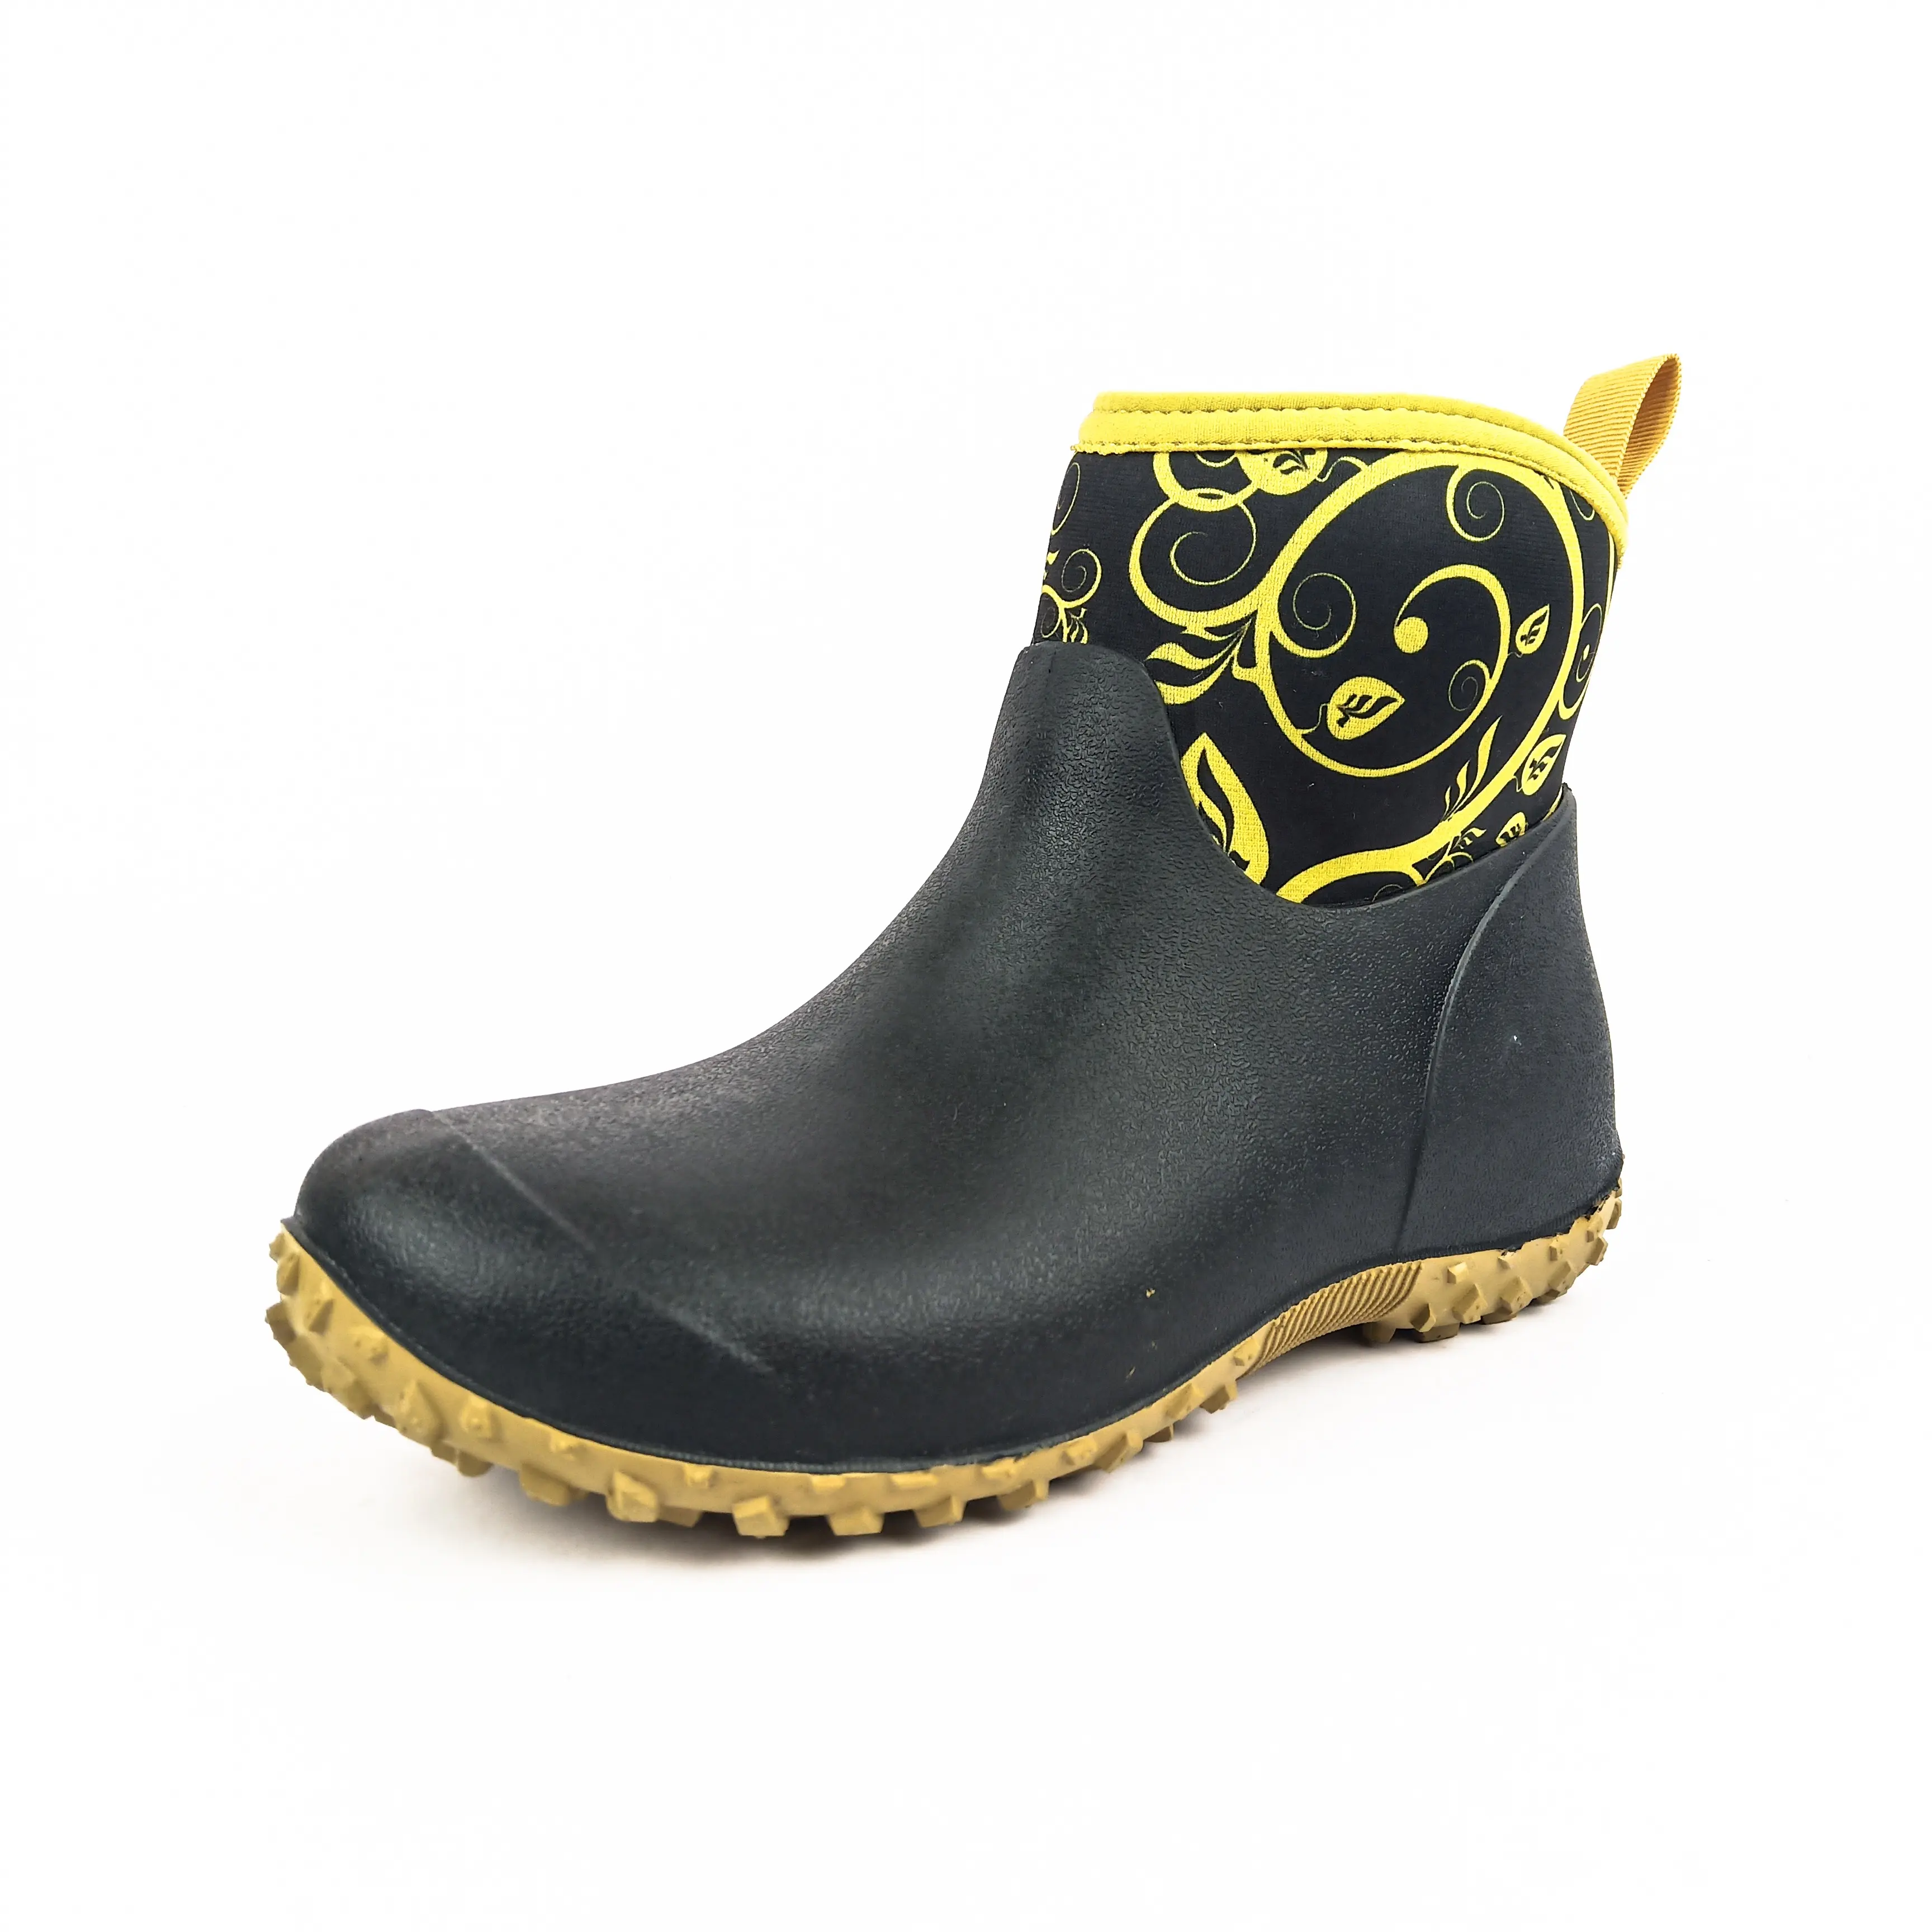 2021 ladies ankle rubber garden outdoor yellow flower print neoprene rain boots slip-on waterproof shoes